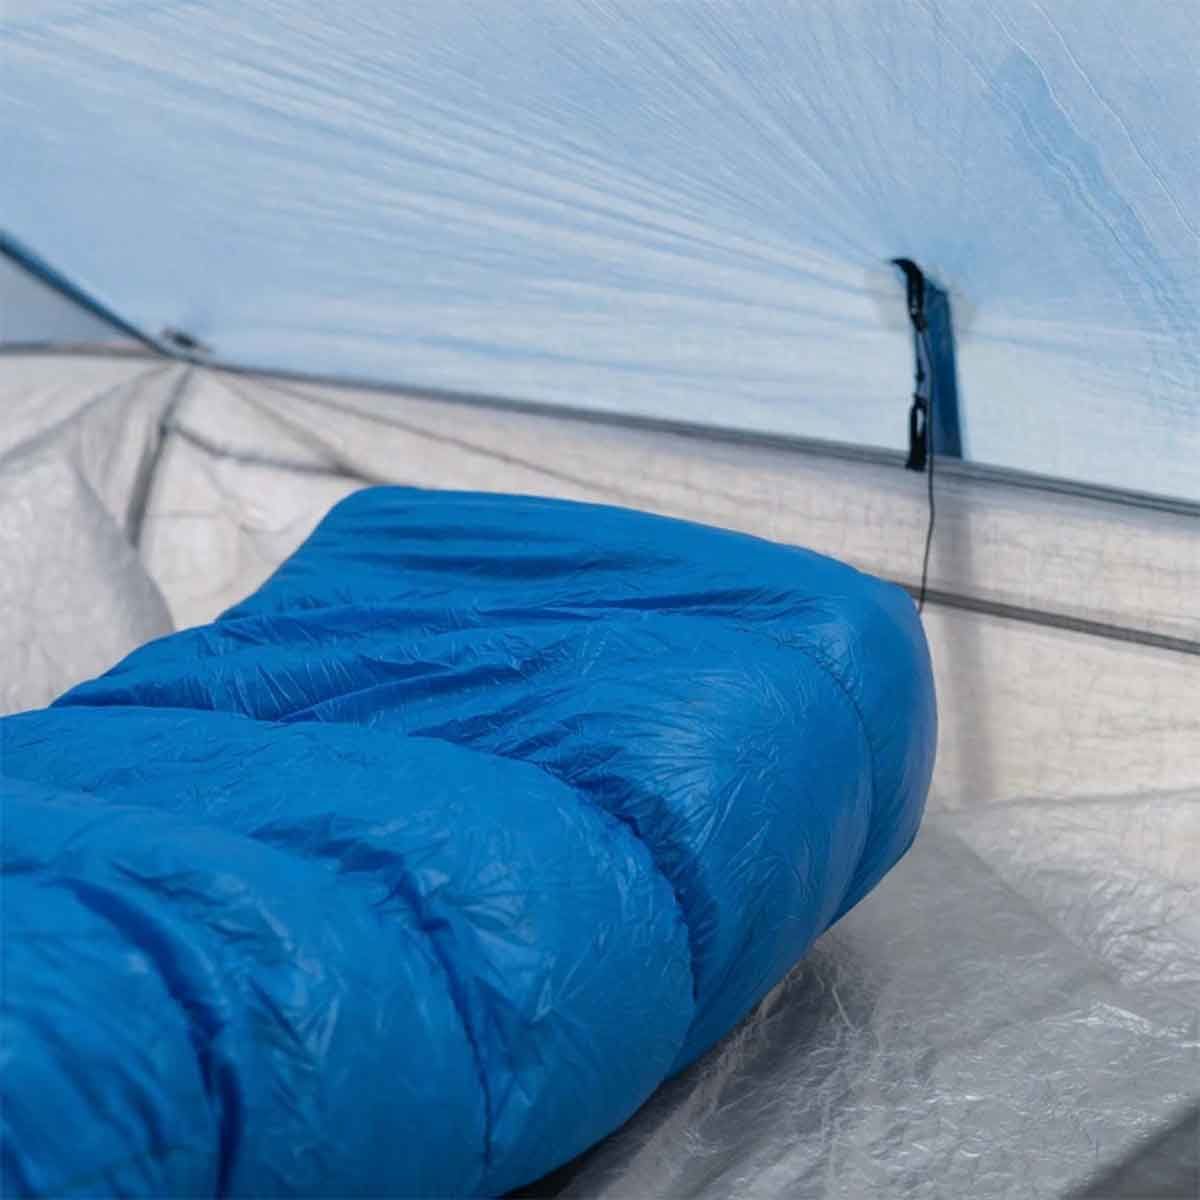 DupleXL Zpacks Tent